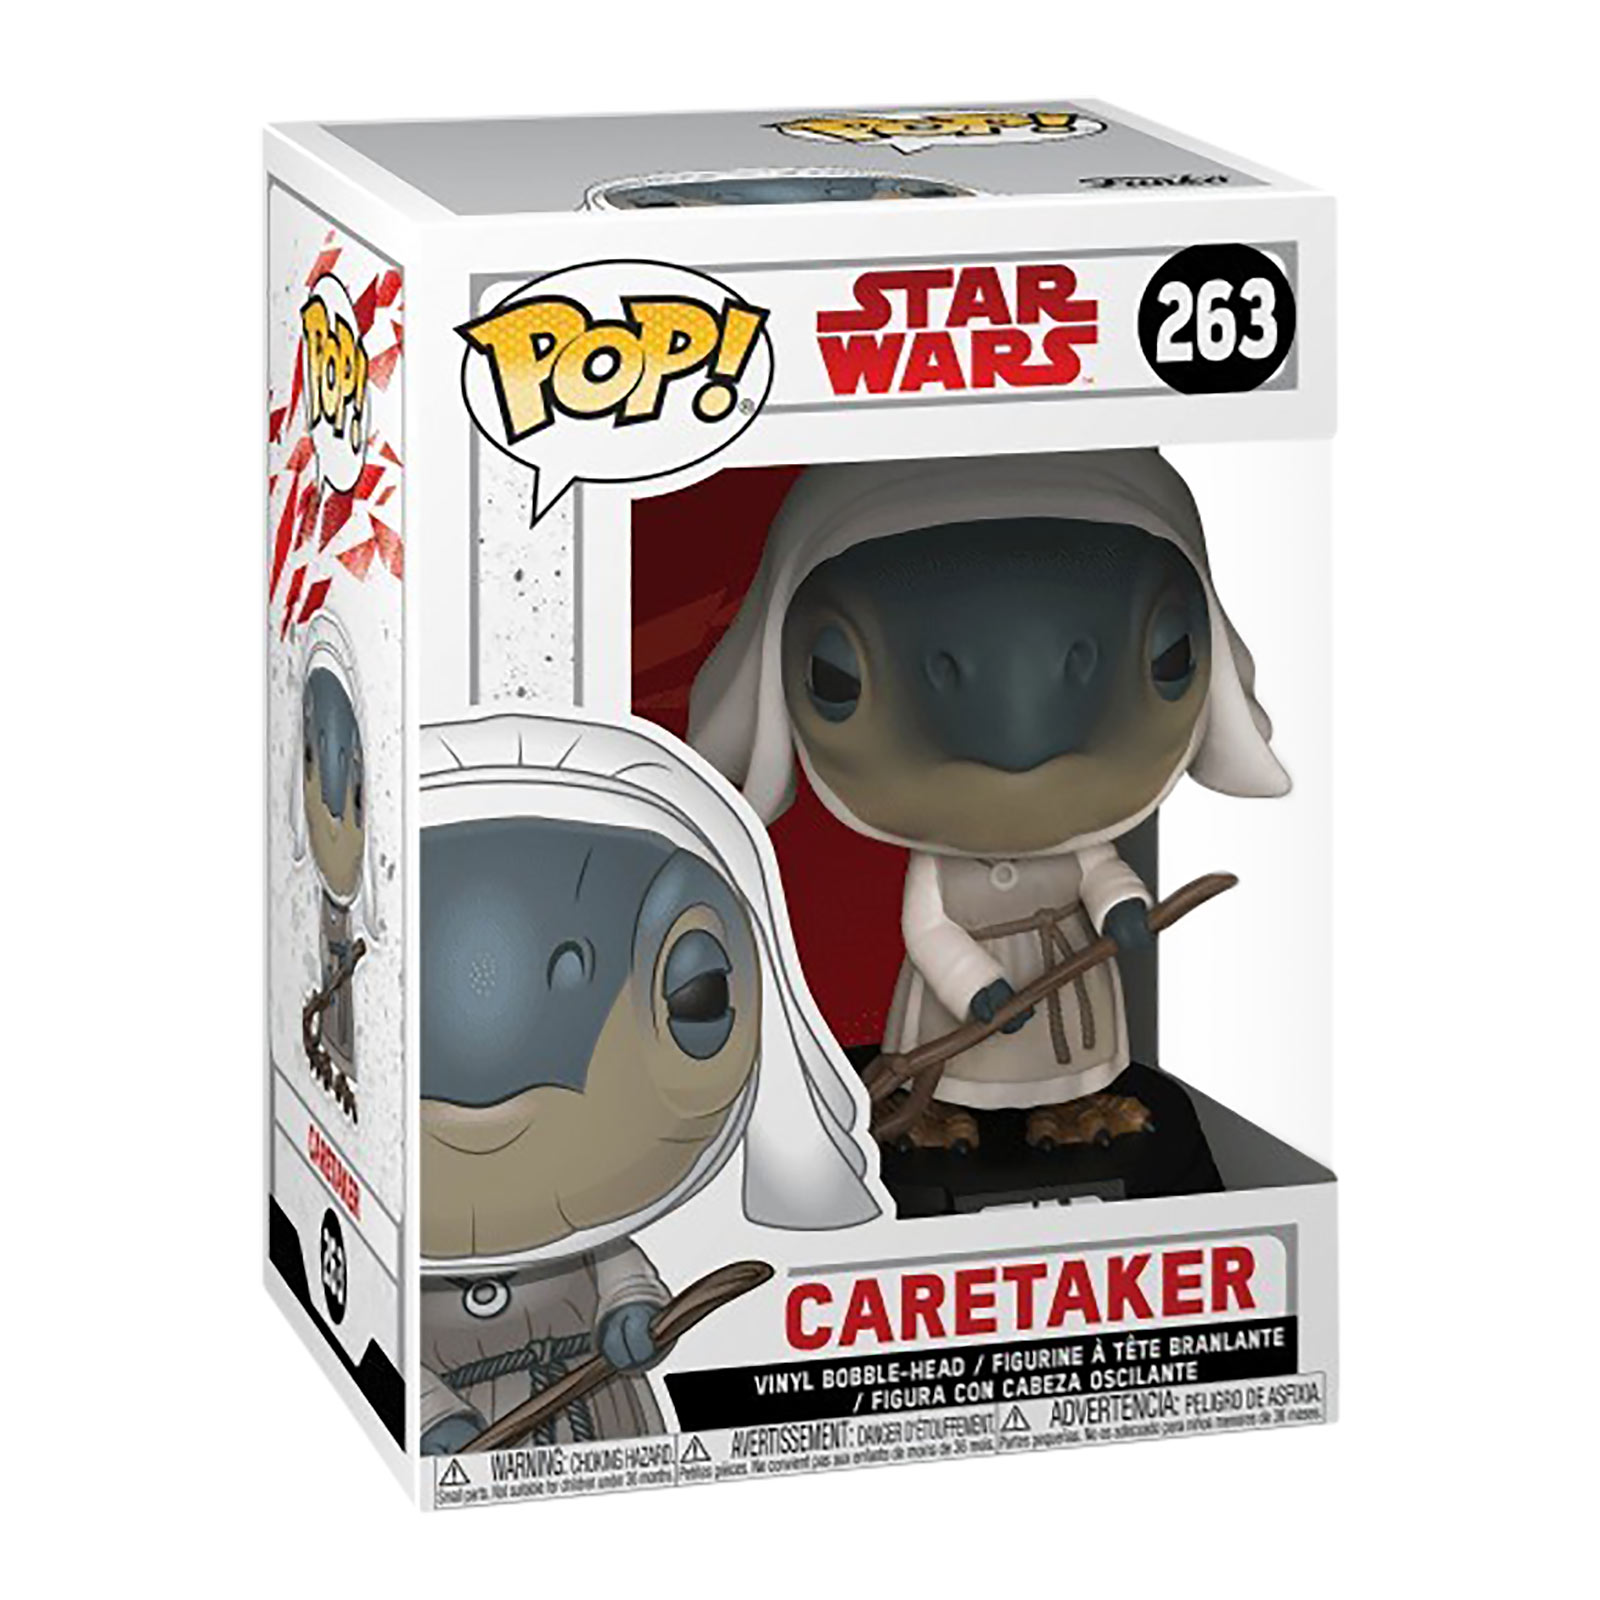 Star Wars - Caretaker Funko Pop bobblehead figure